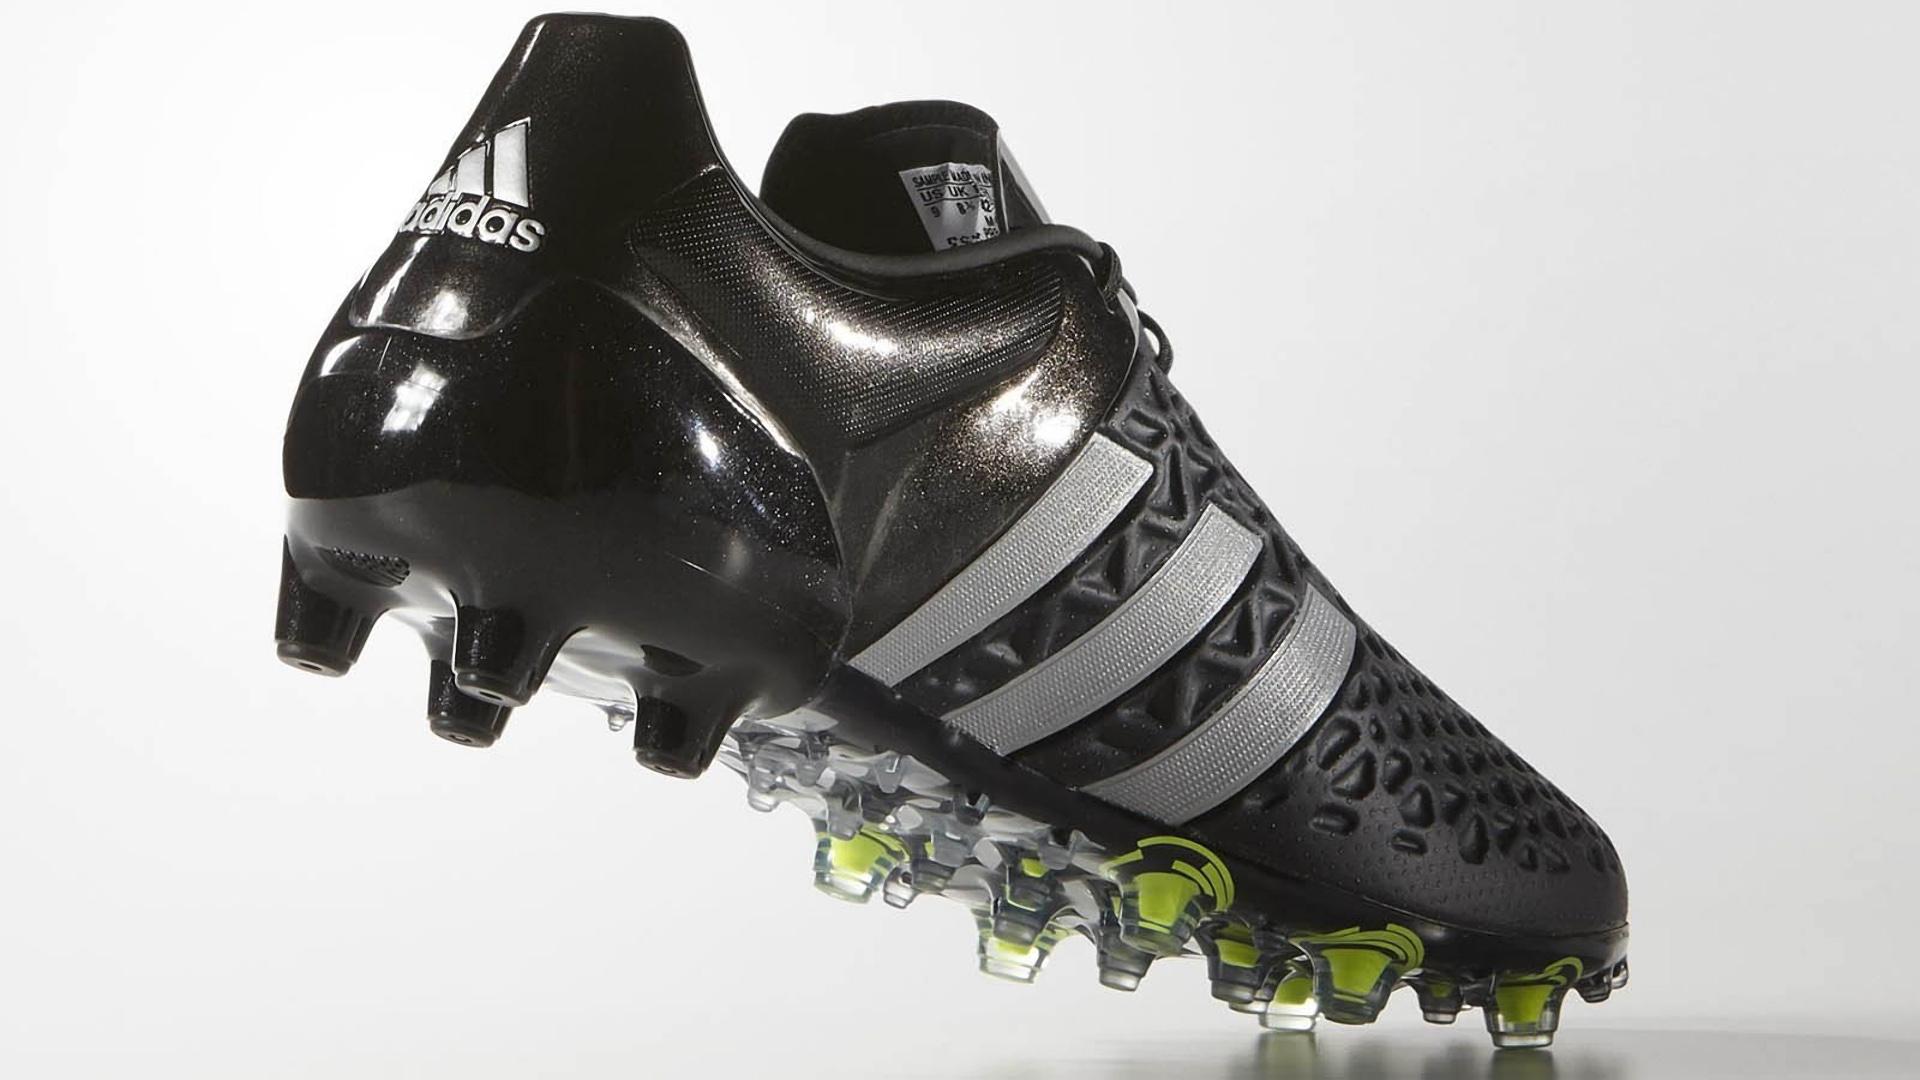 Black Reflective Adidas Ace 2015 Football Boots Wallpaper